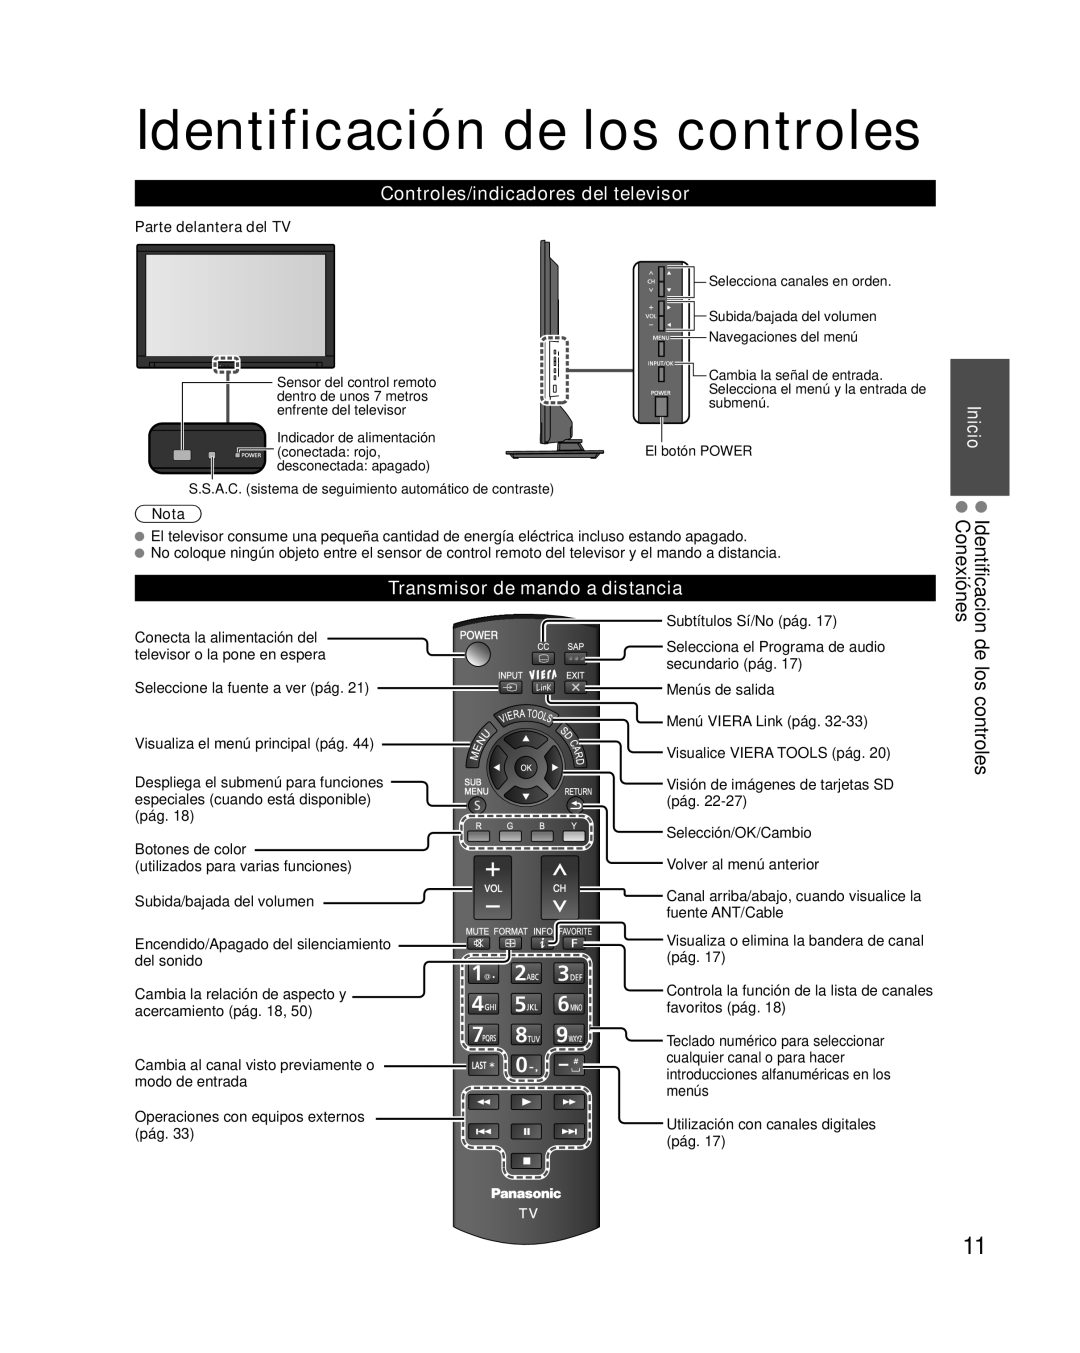 Panasonic TC-L42E30 Identificación de los controles, Controles/indicadores del televisor, Transmisor de mando a distancia 